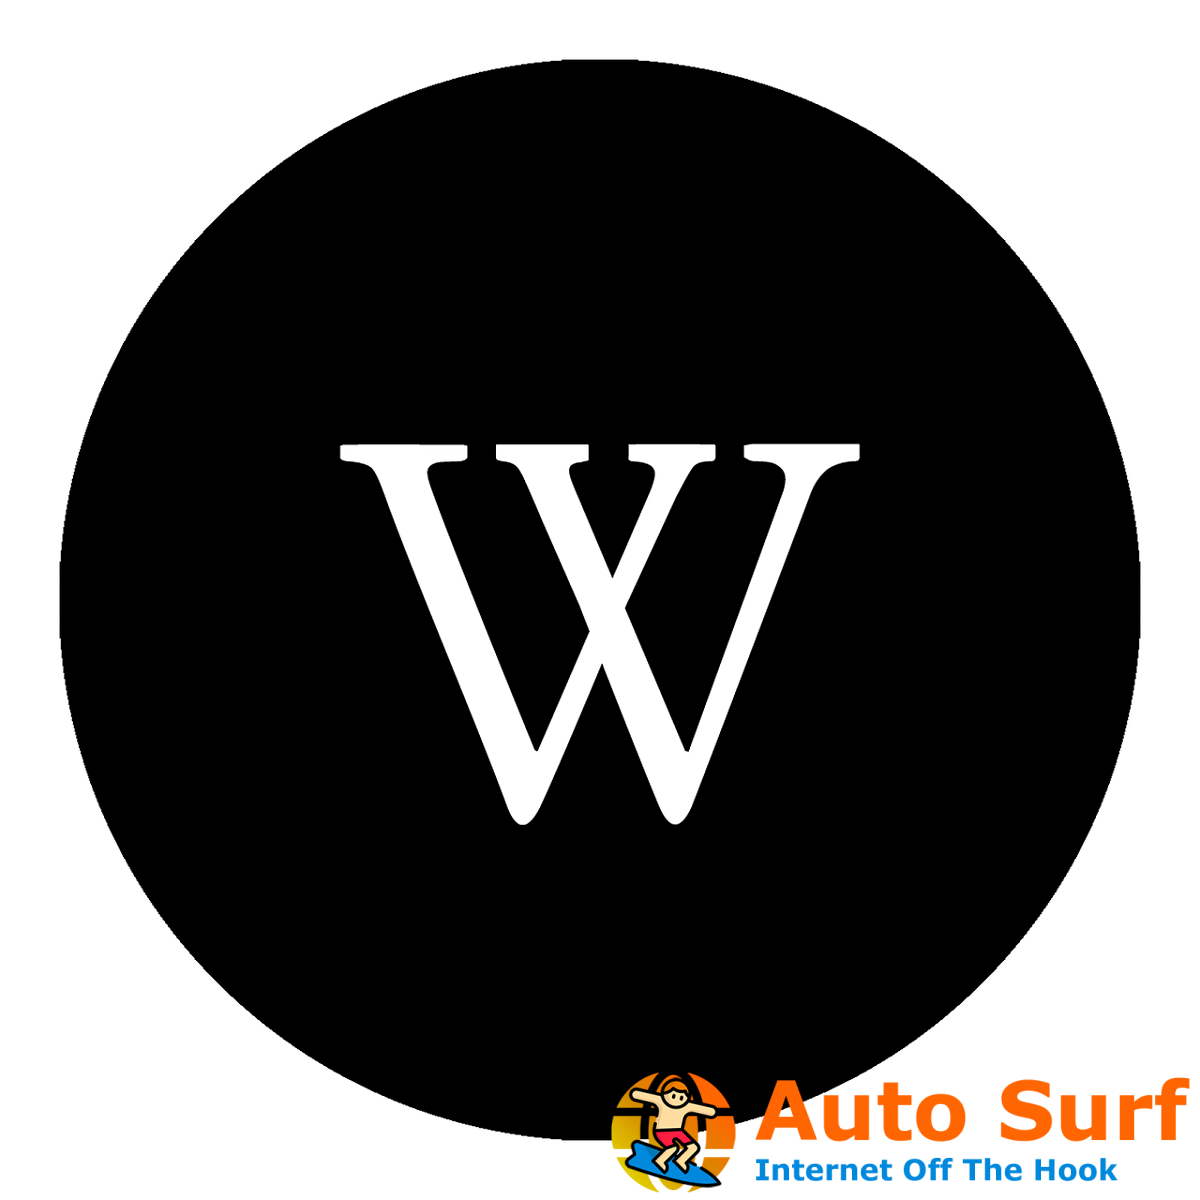 Descarga la aplicación Wikipedia para Windows 10/11 [Link and Review]